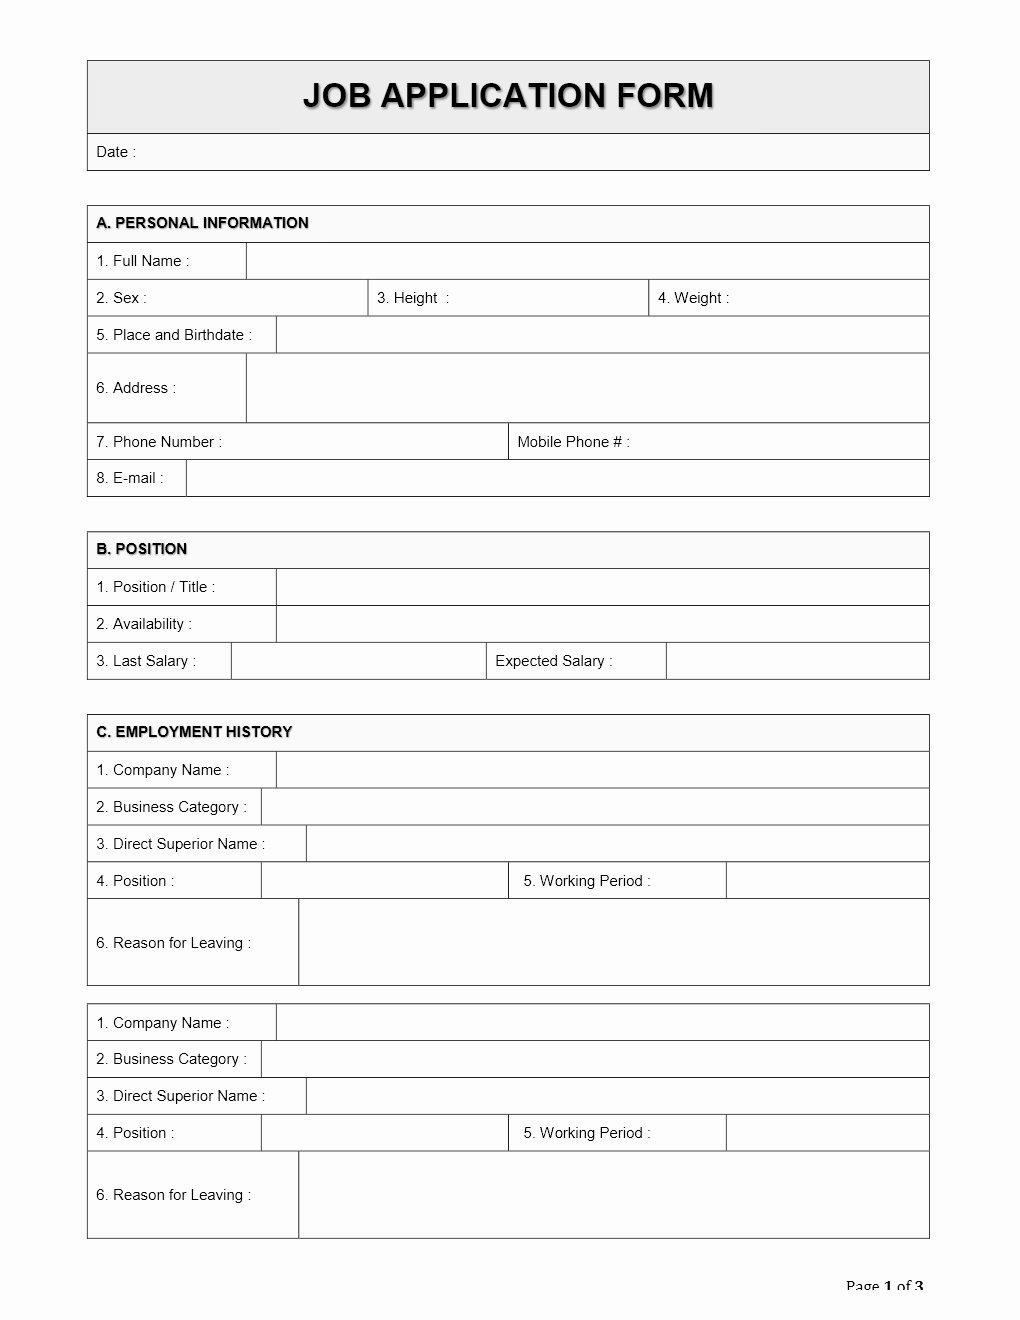 Job Application form Template Word Beautiful Employee Job Application form